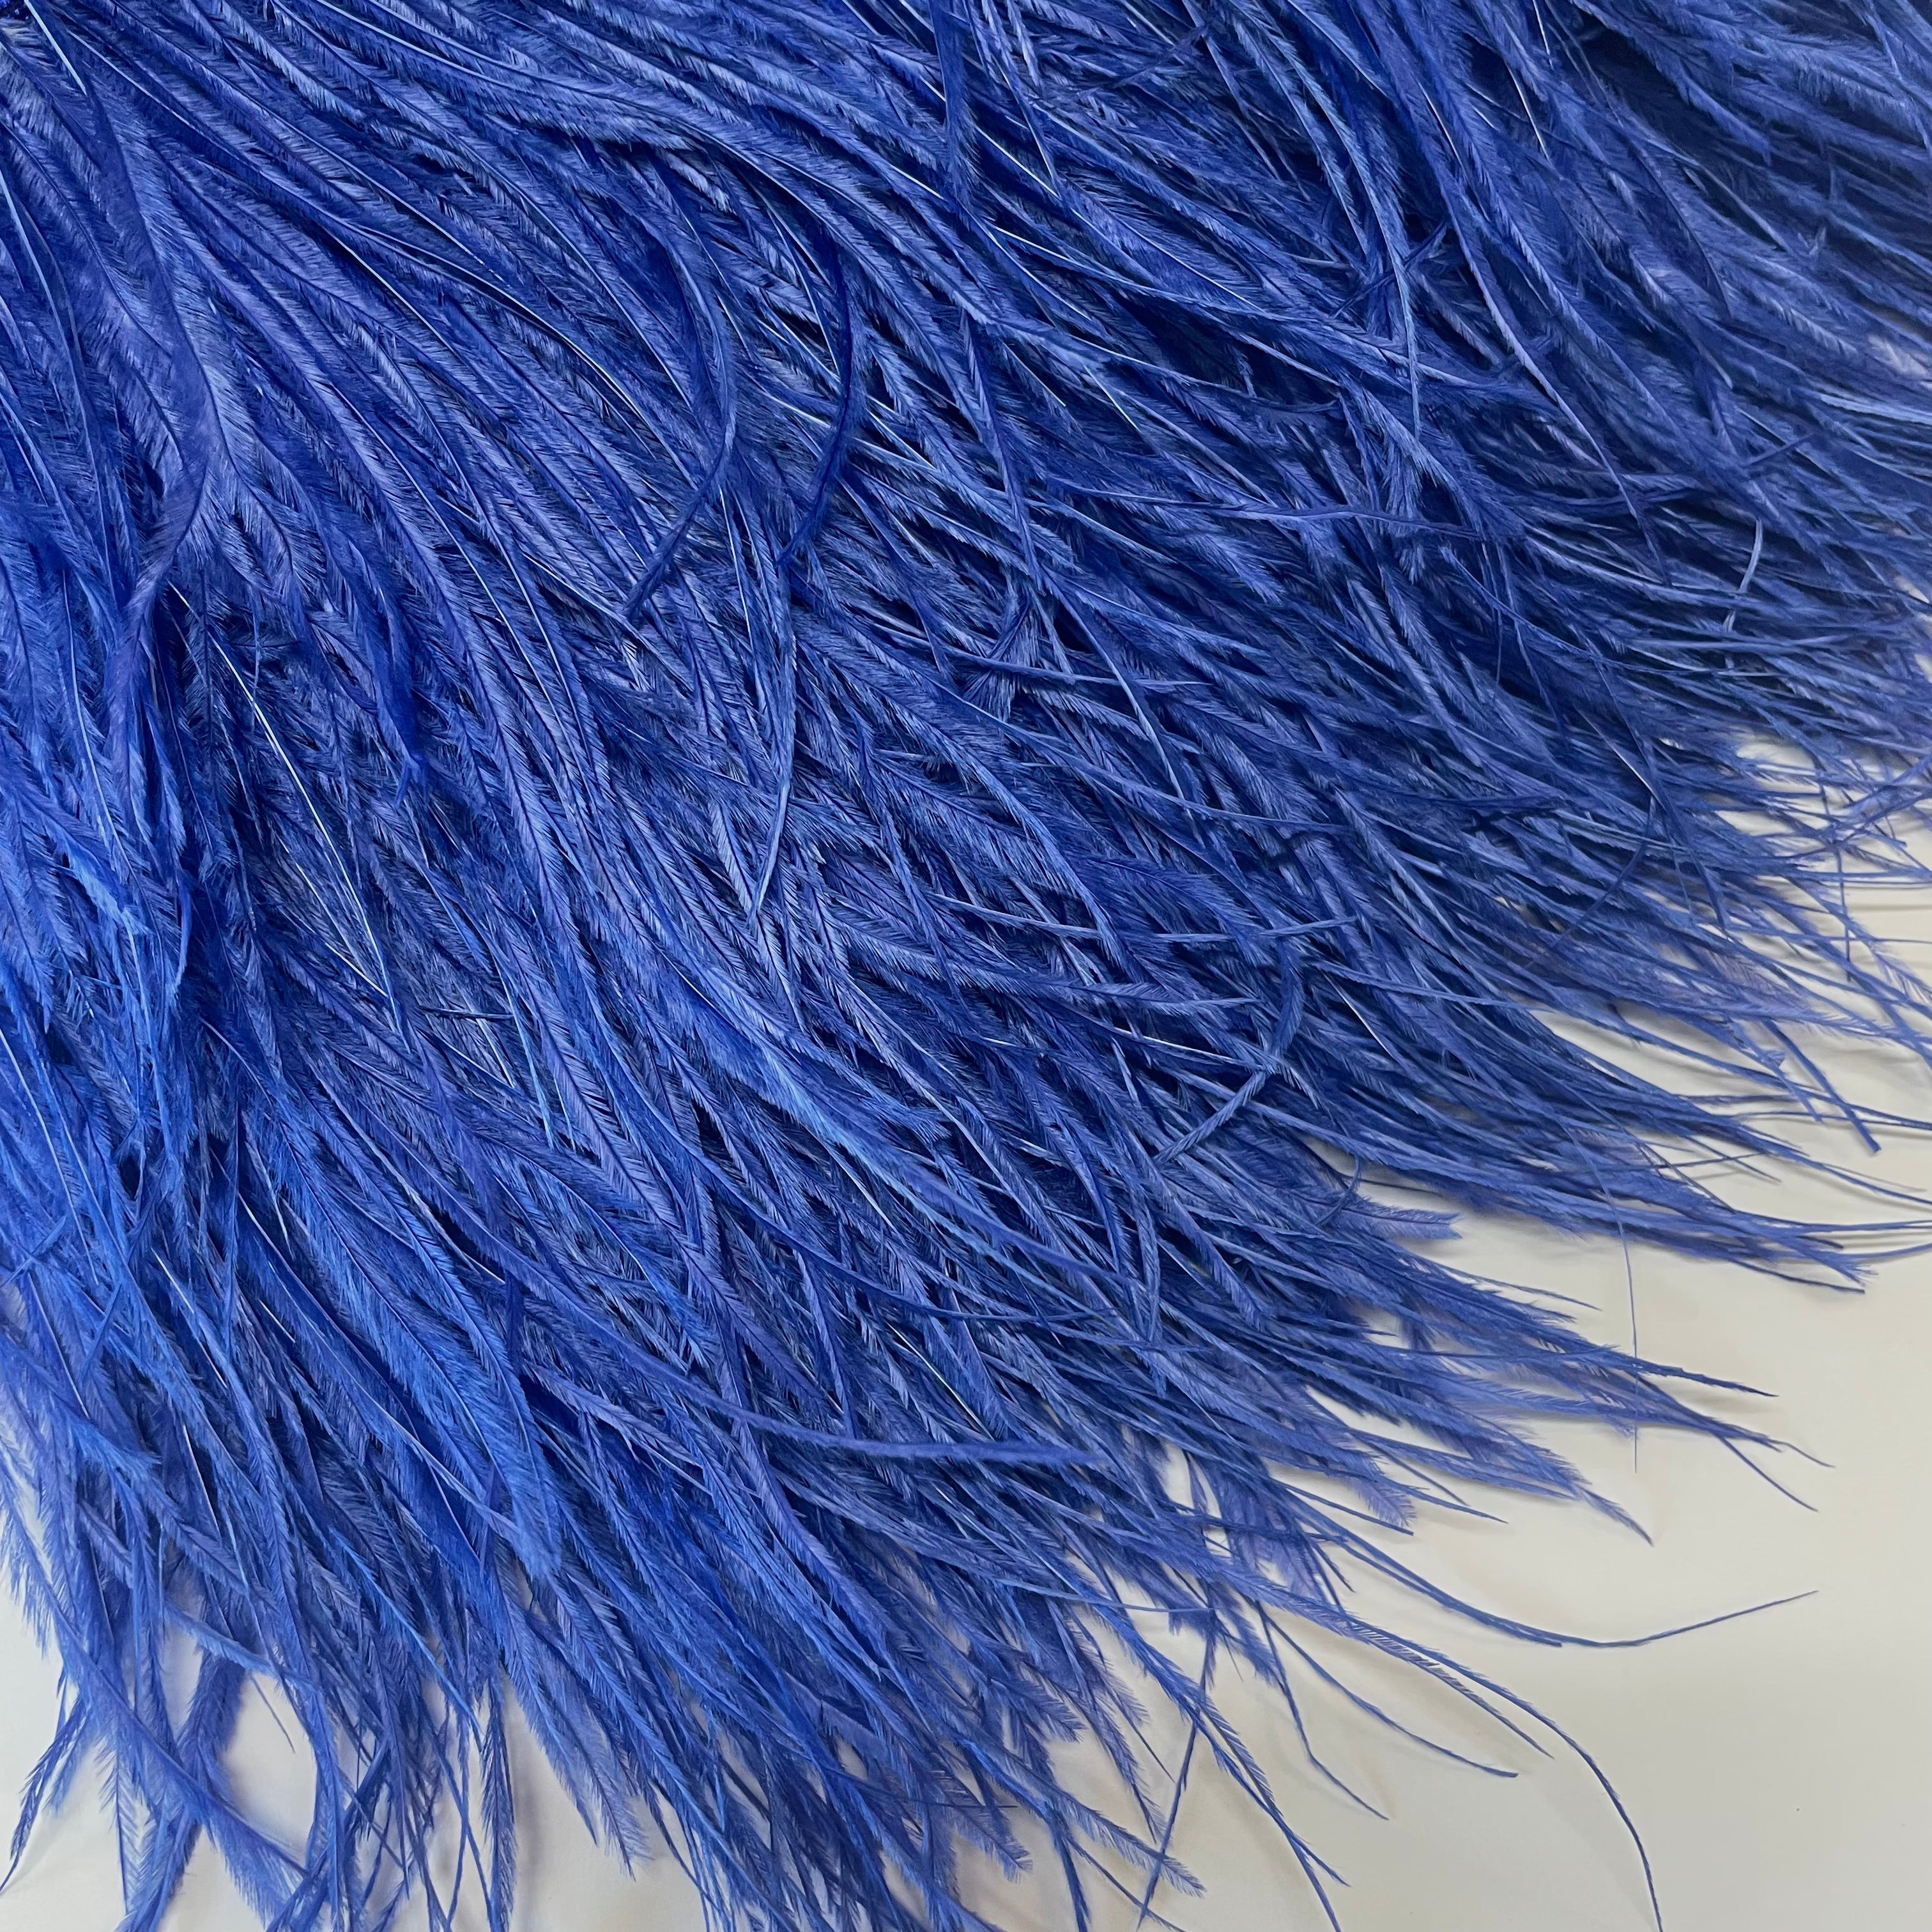 Ostrich Feathers Strung per 10cm - Royal Blue